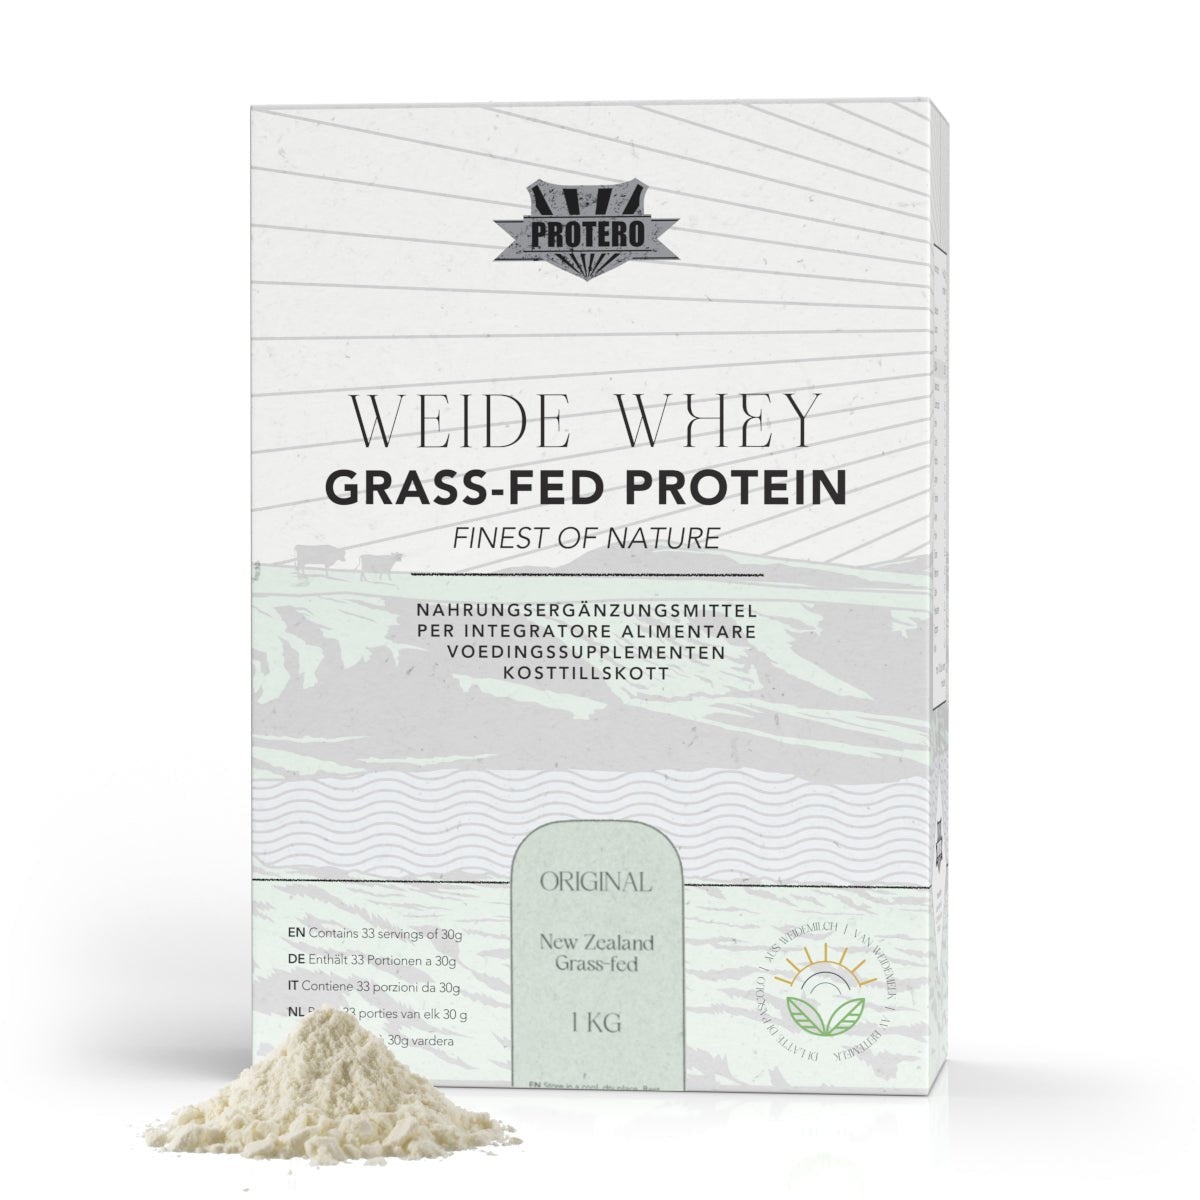 Weide Whey Protein - Grass-fed - 1 kg